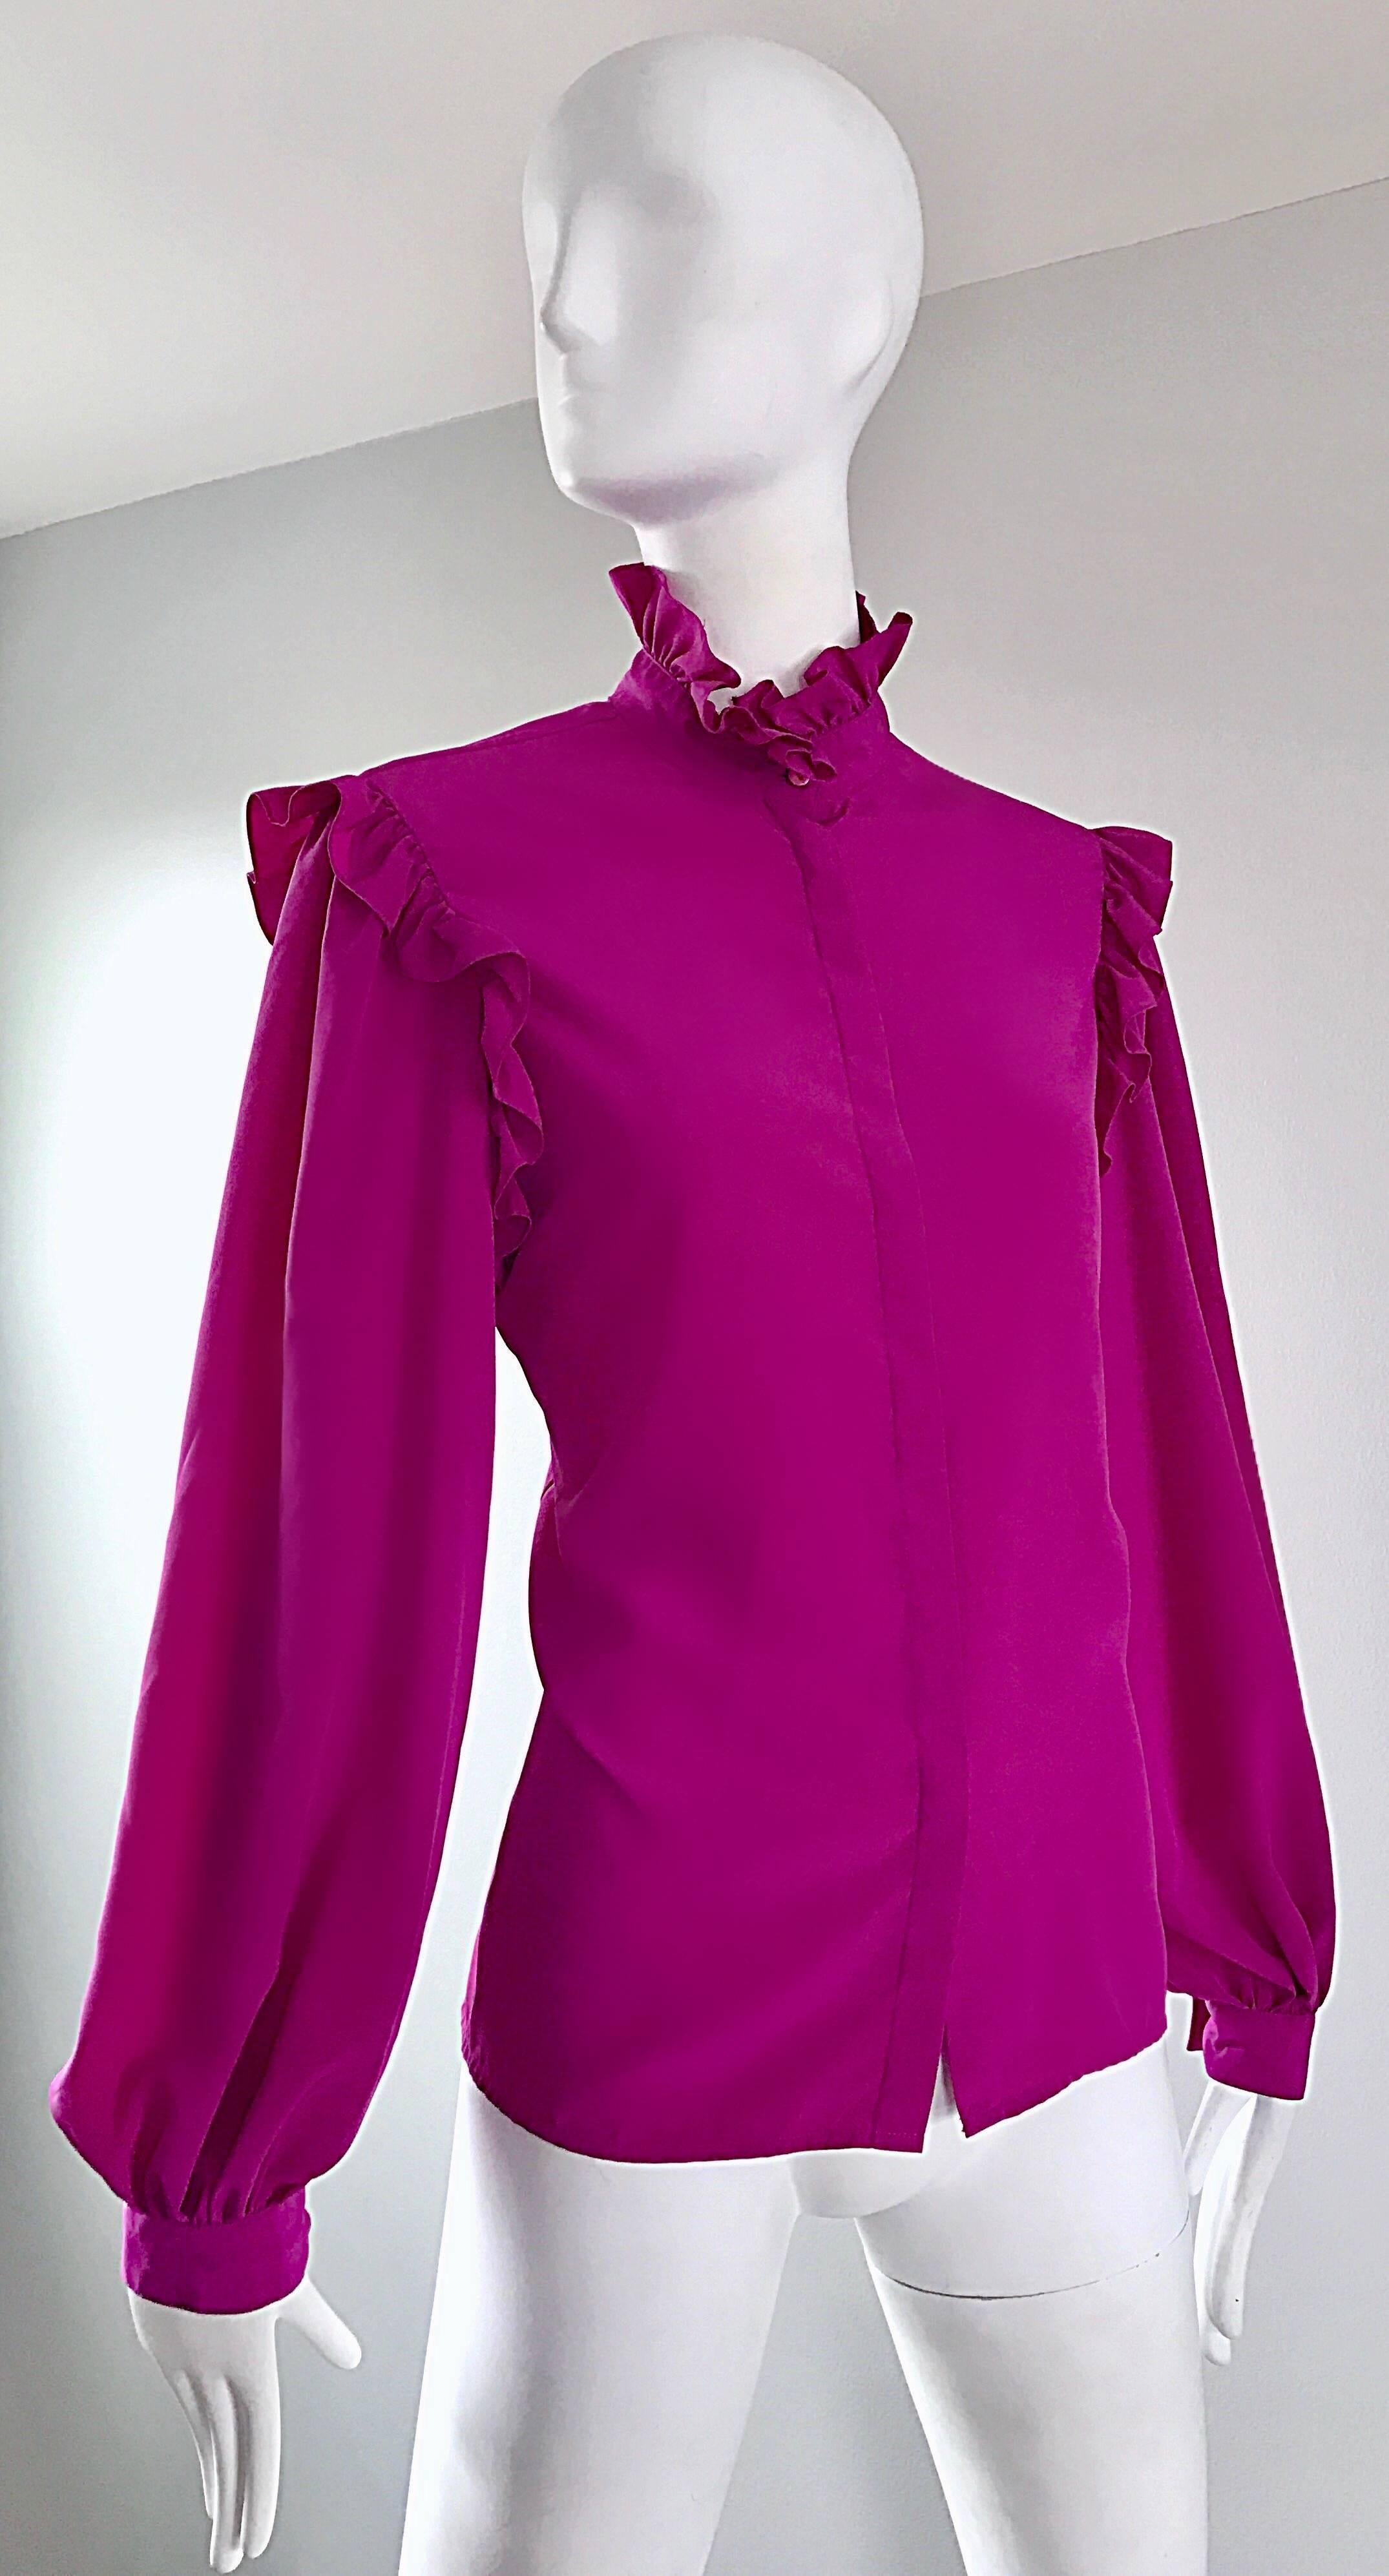 Women's Oscar de la Renta 1970s Magenta Fuchsia Pink Silk Bishop Sleeve Vintage Blouse